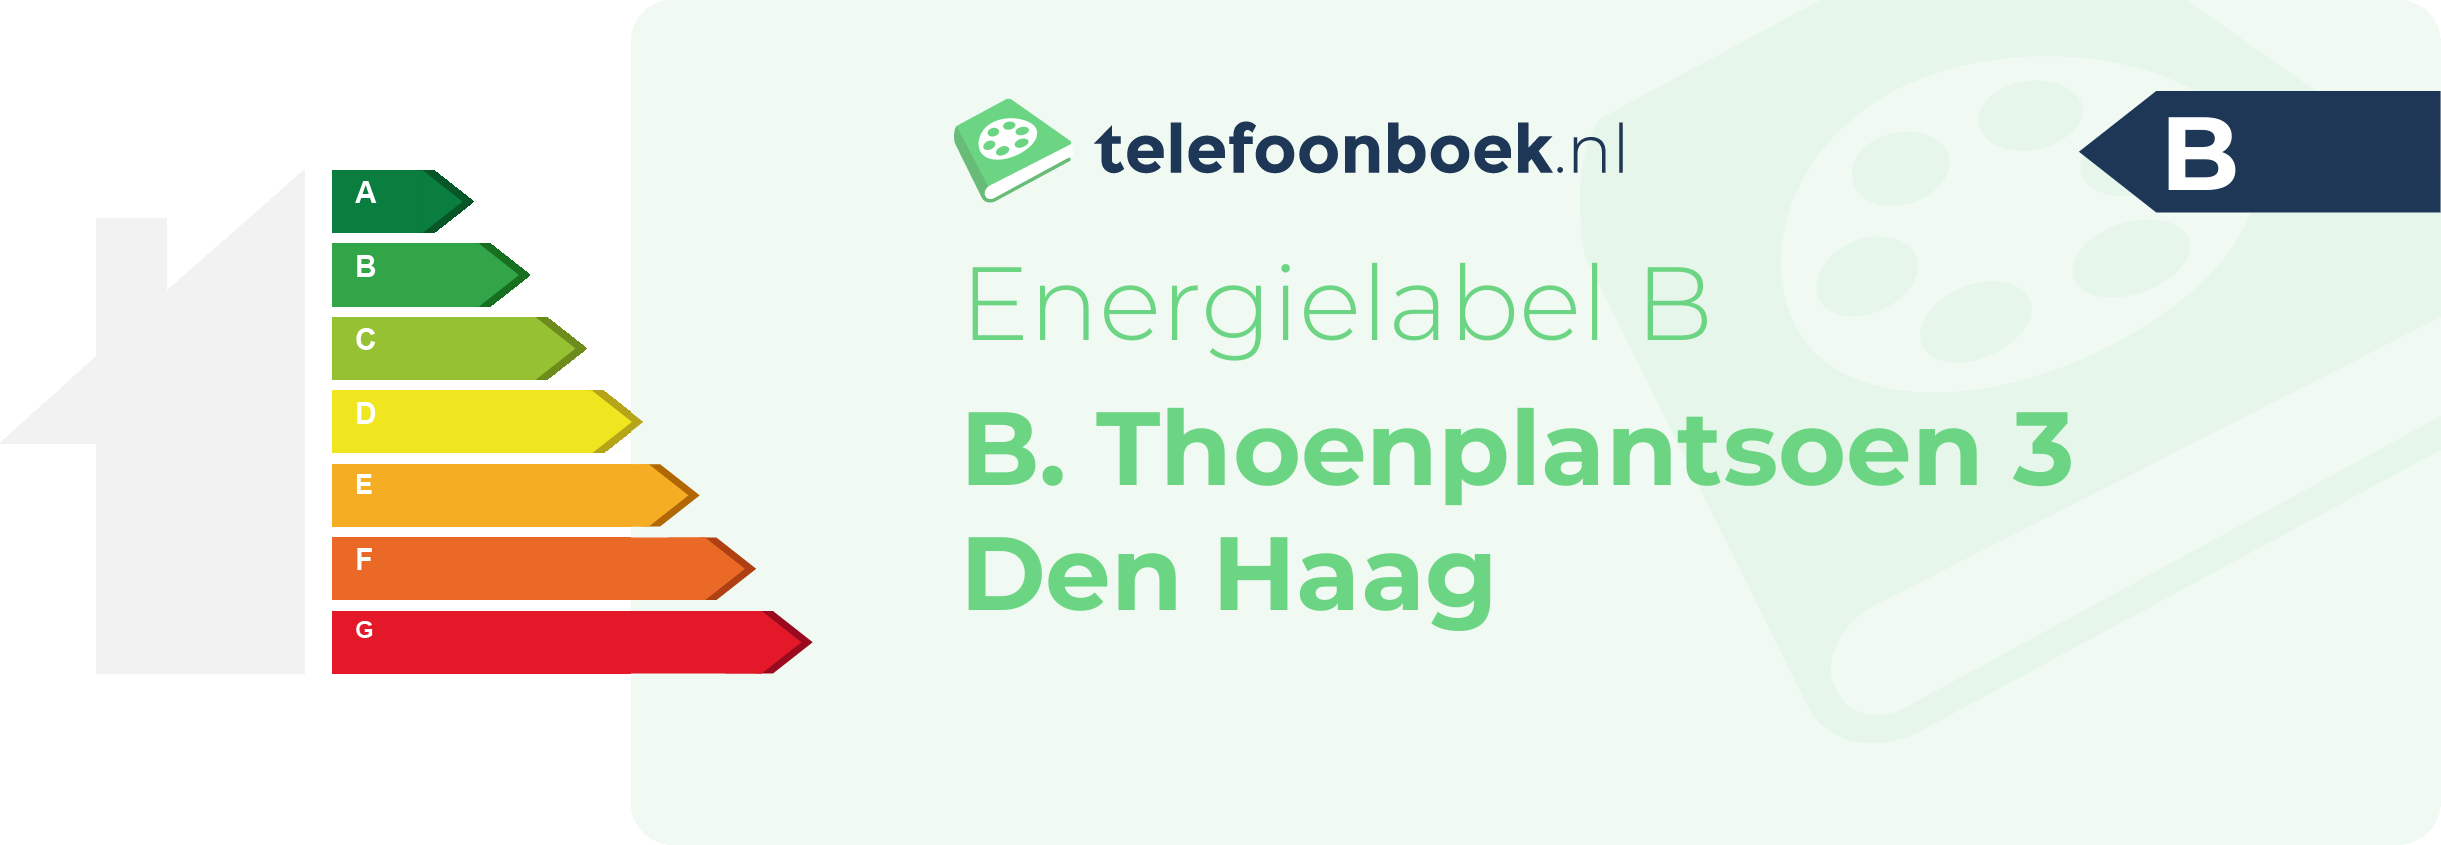 Energielabel B. Thoenplantsoen 3 Den Haag